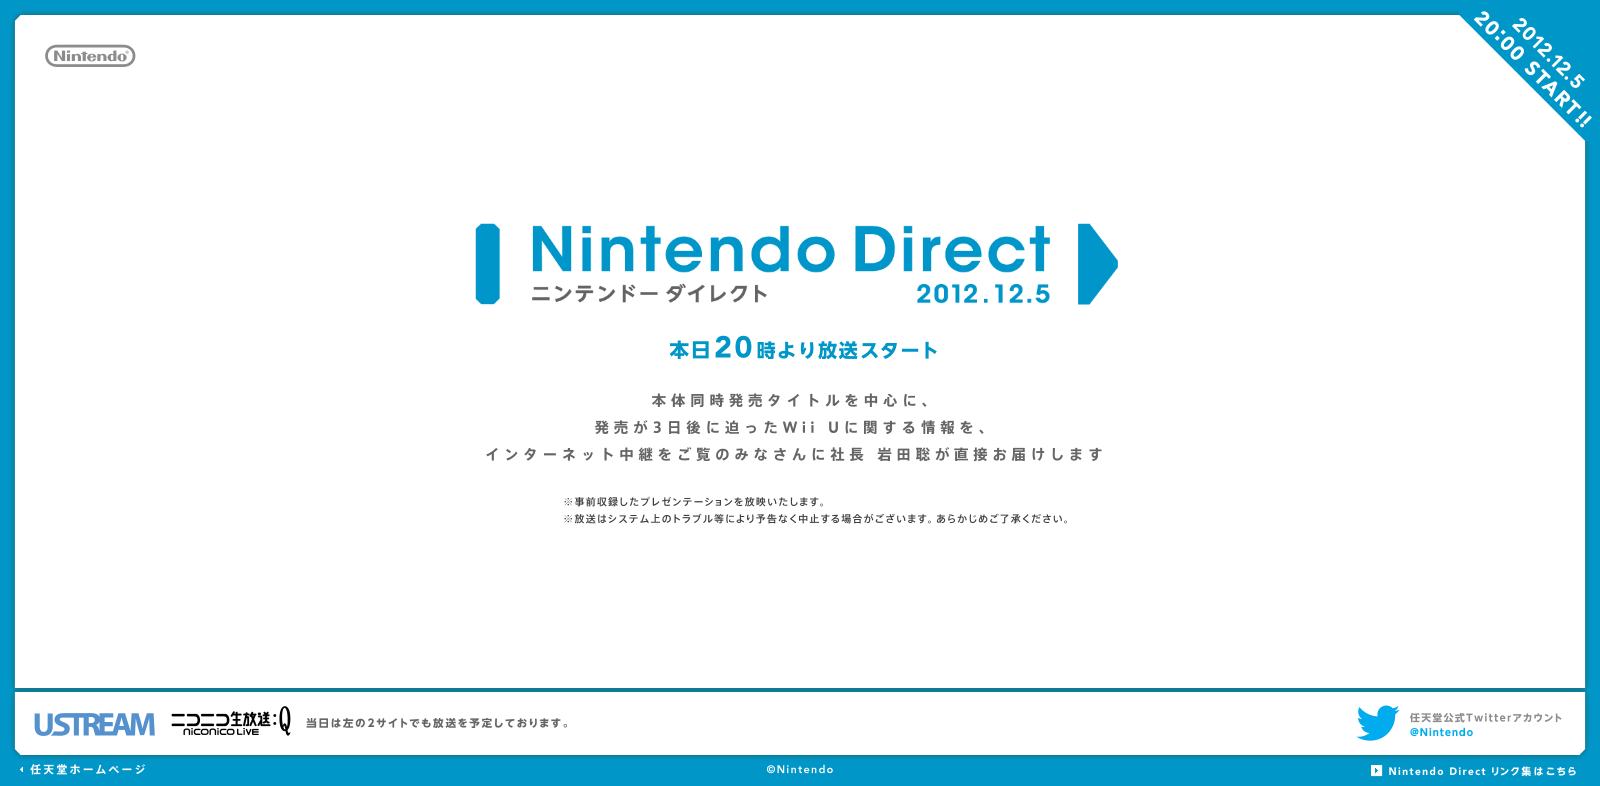 Rumor: Details about tomorrow's European Nintendo Direct leaked